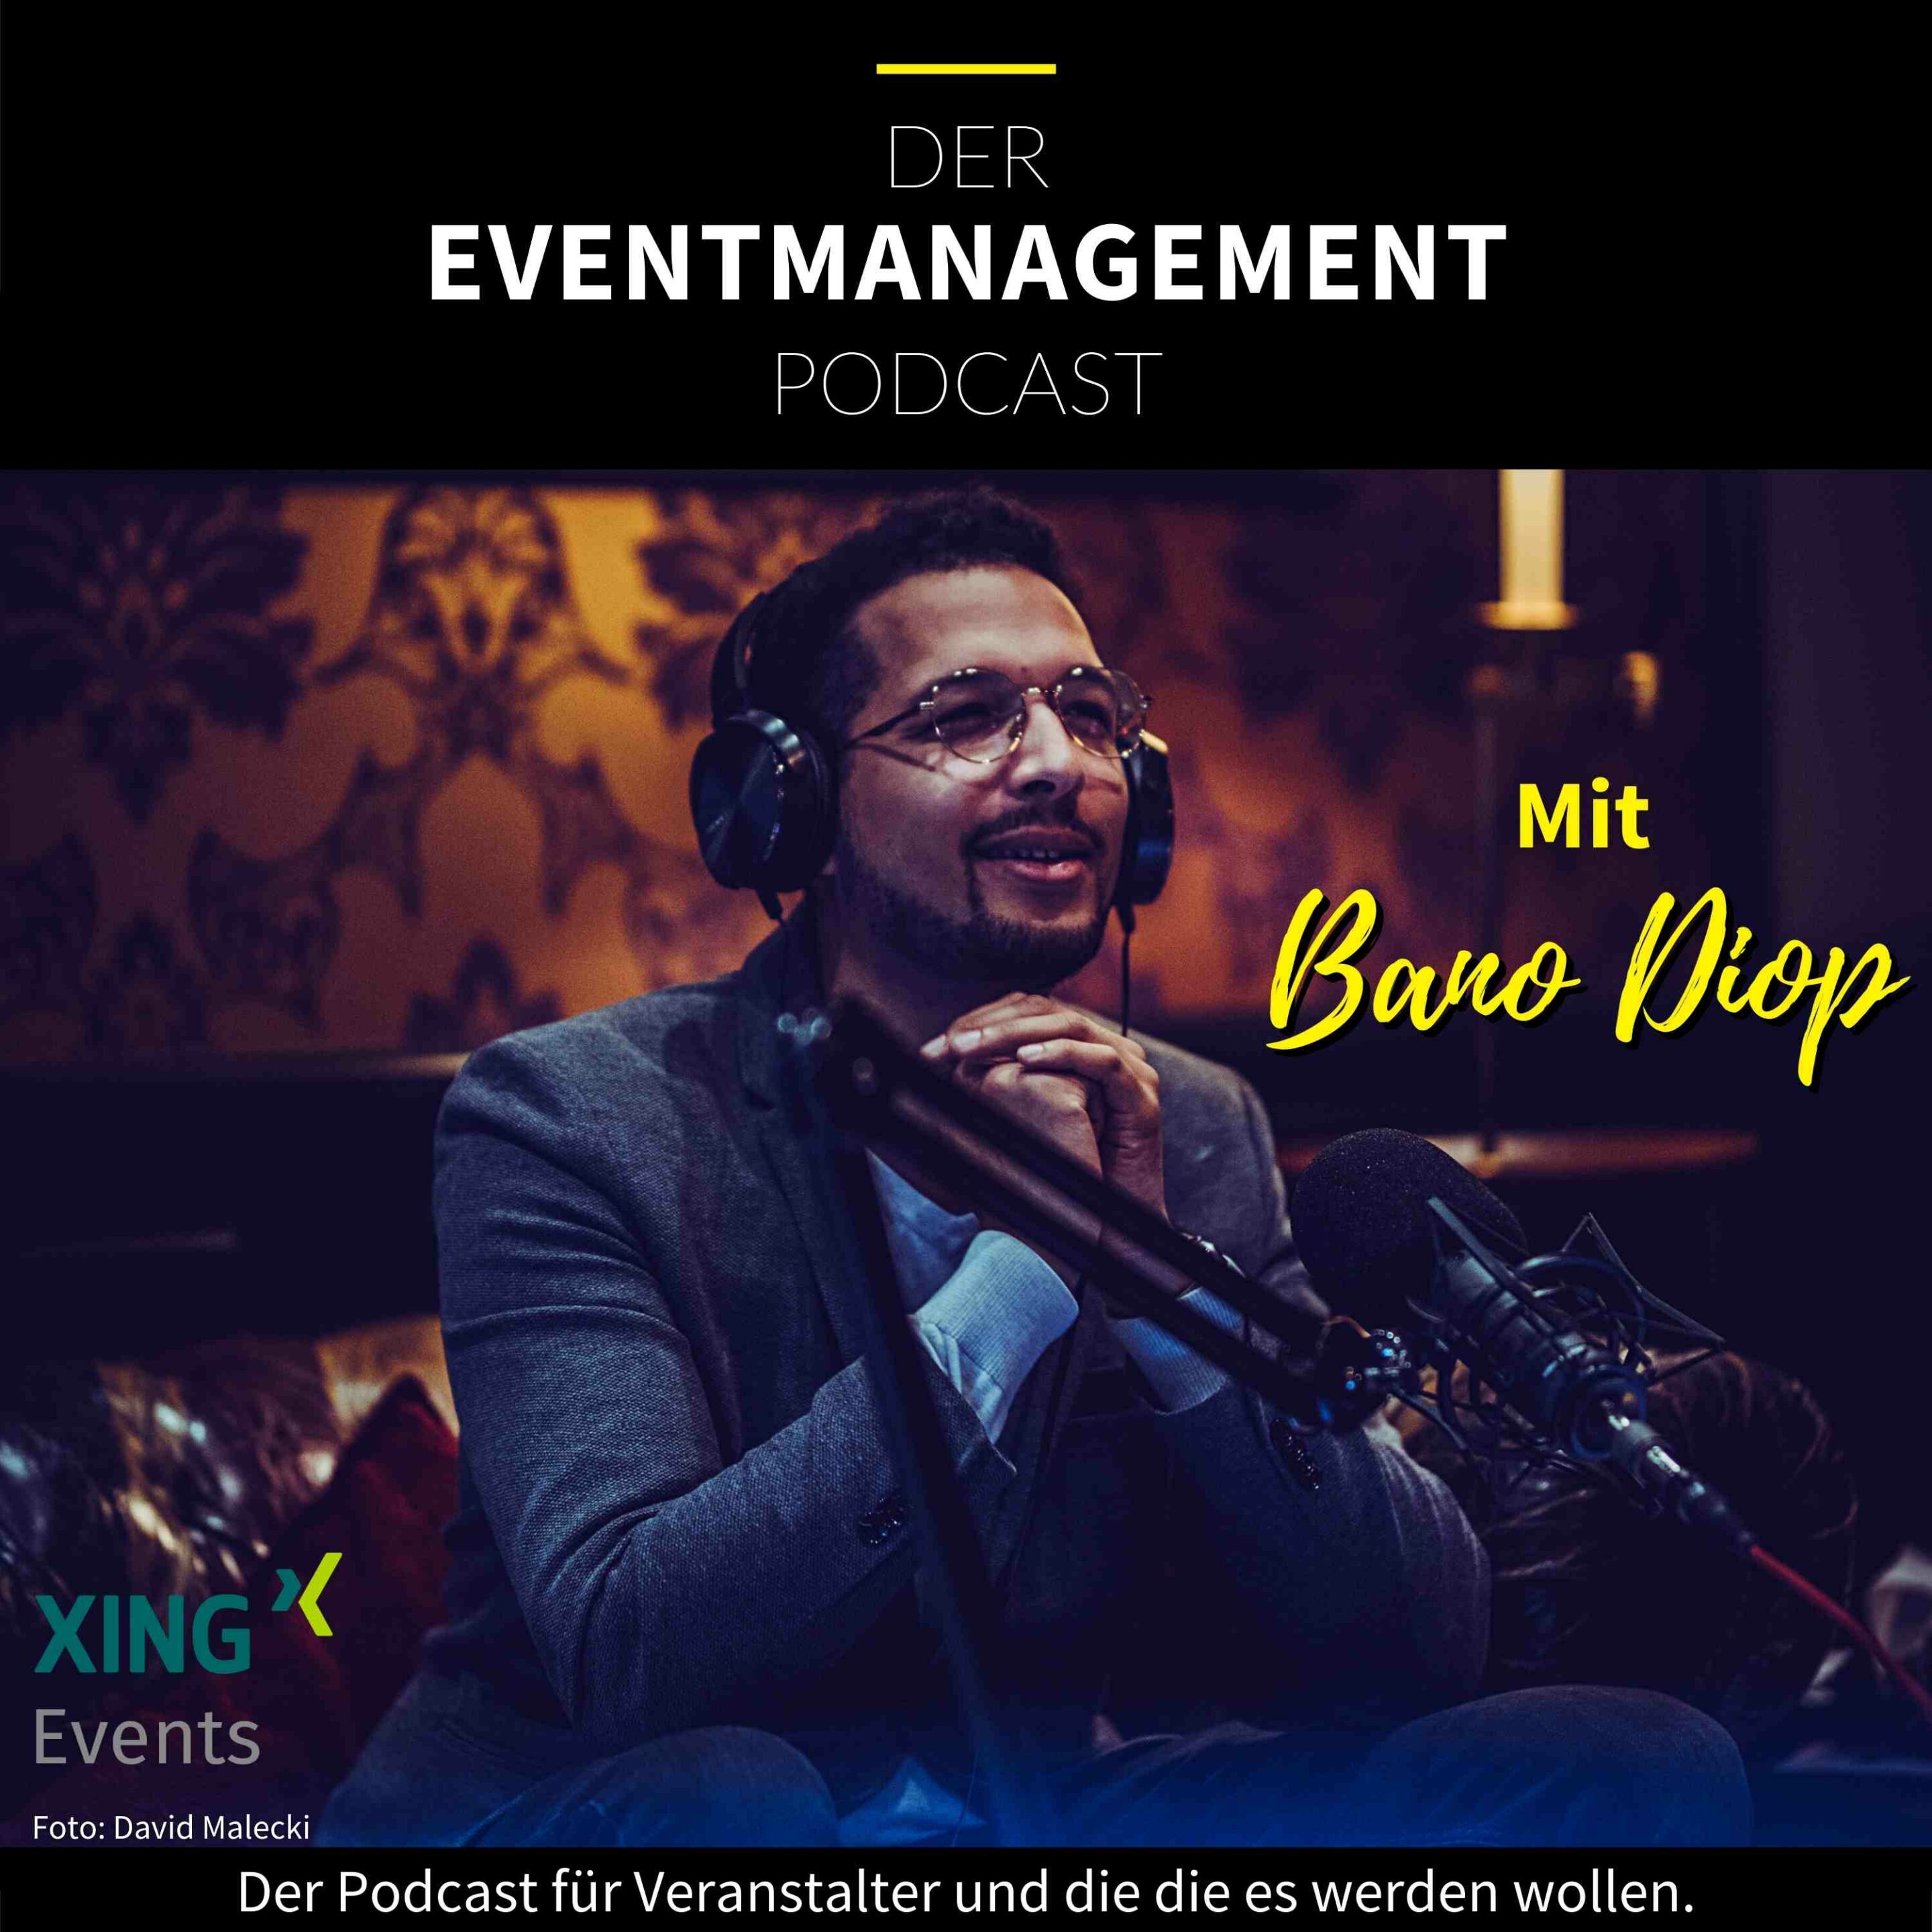 Der Eventmanagement Podcast - Mit Bano Diop